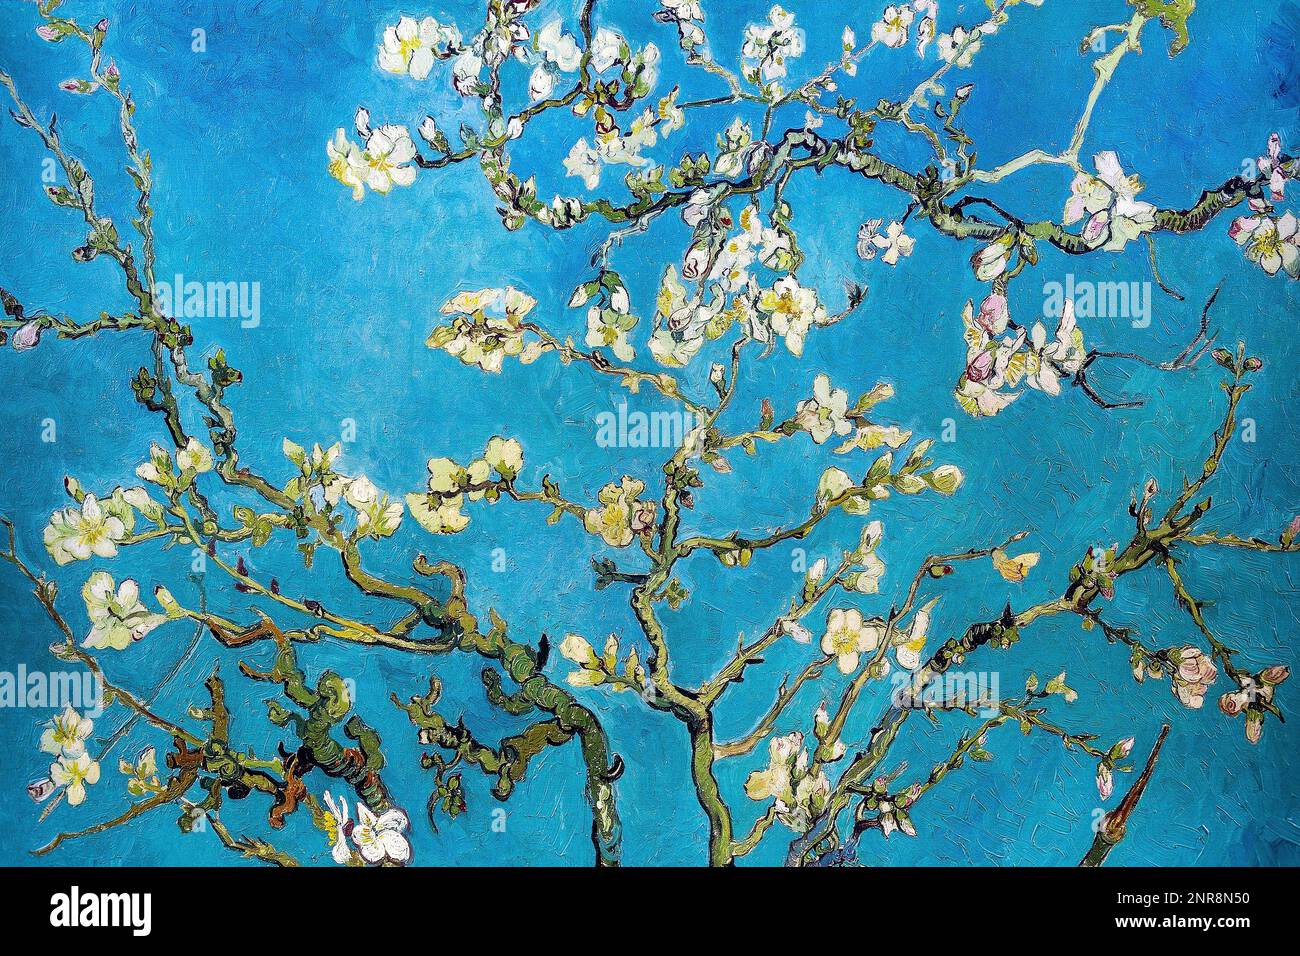 Mandelblüte, Vincent Van Gogh Gemälde. Stockfoto